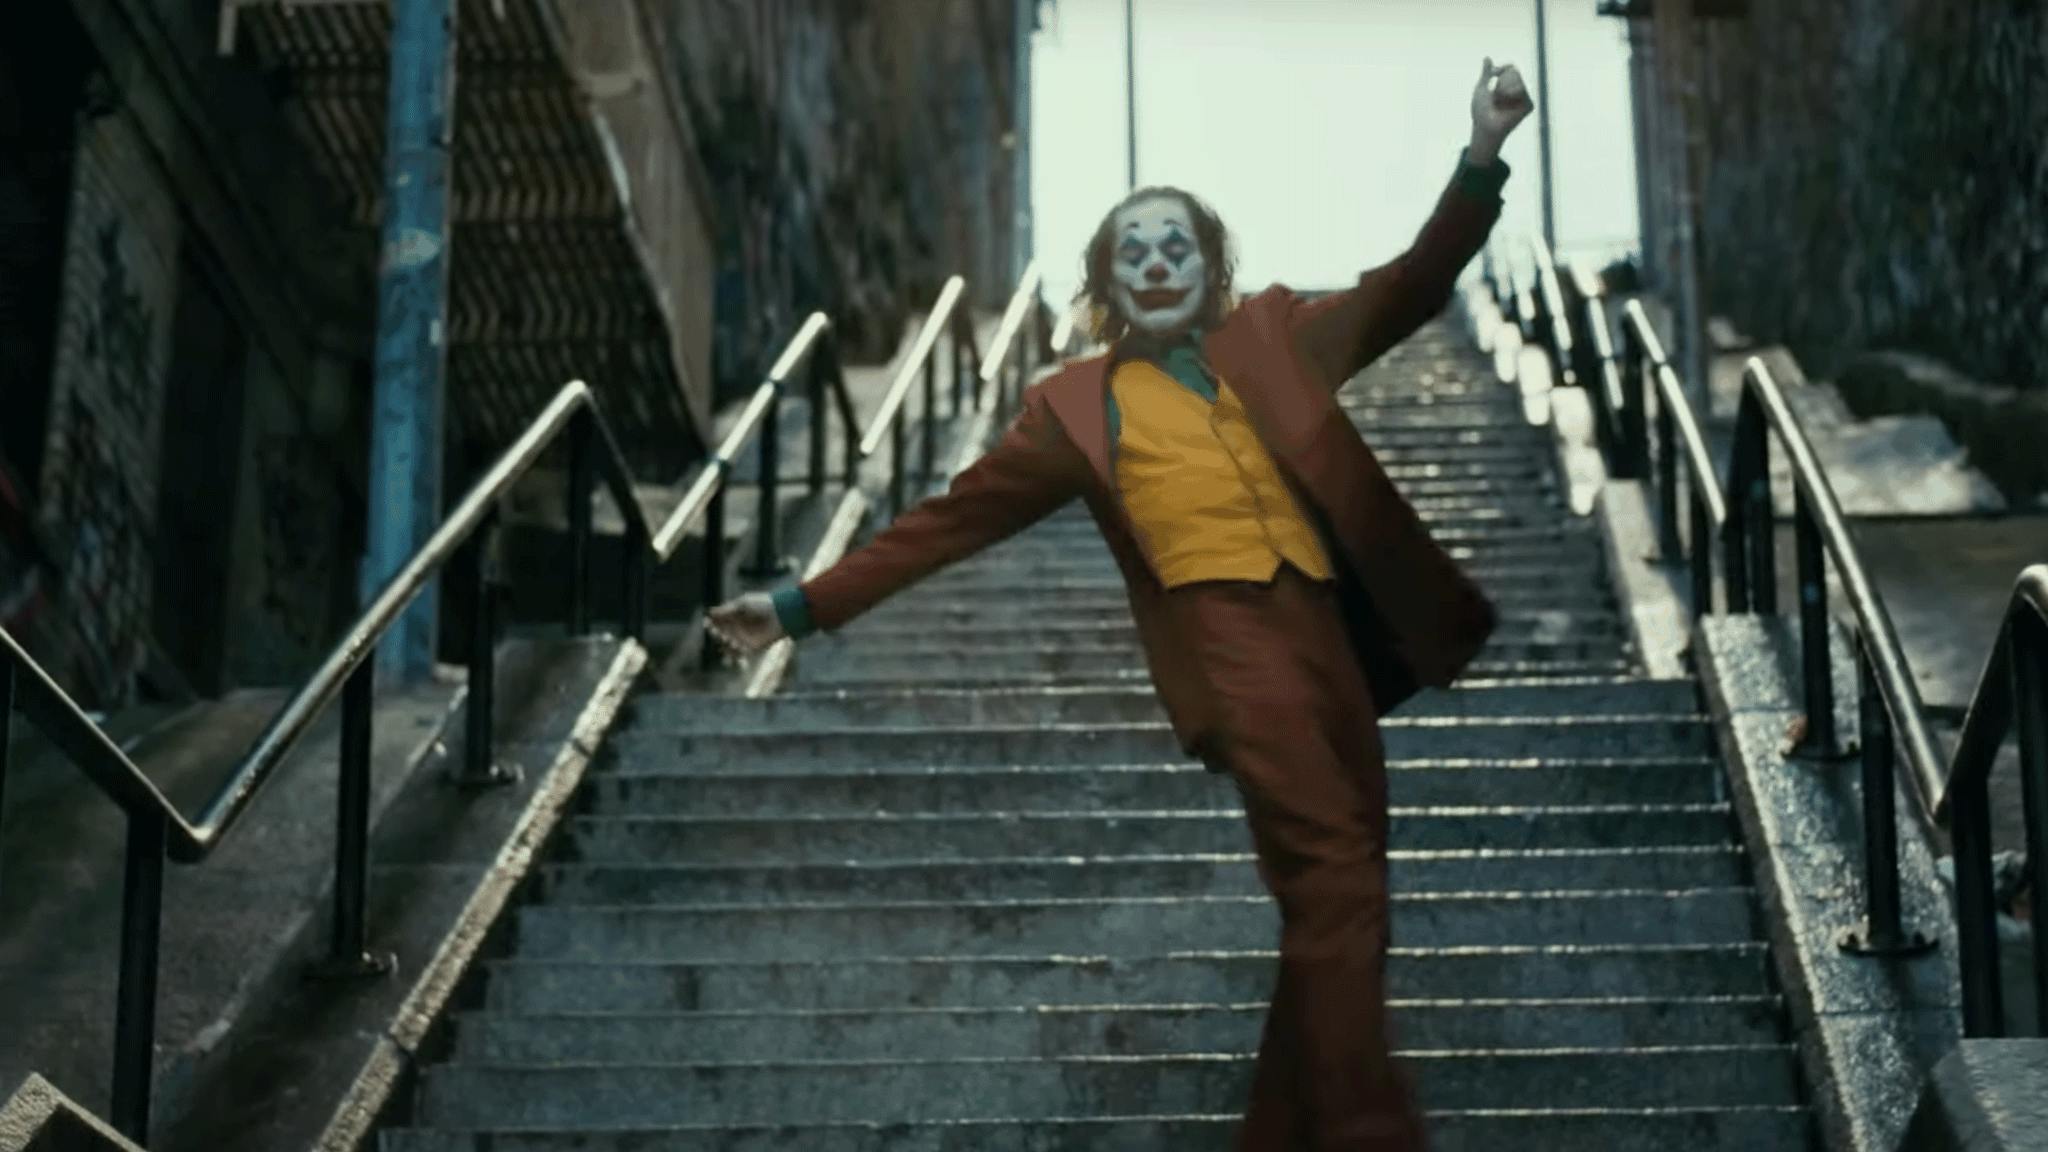 Joker 2: Lady Gaga and Joaquin Phoenix seen filming on iconic Bronx stairs